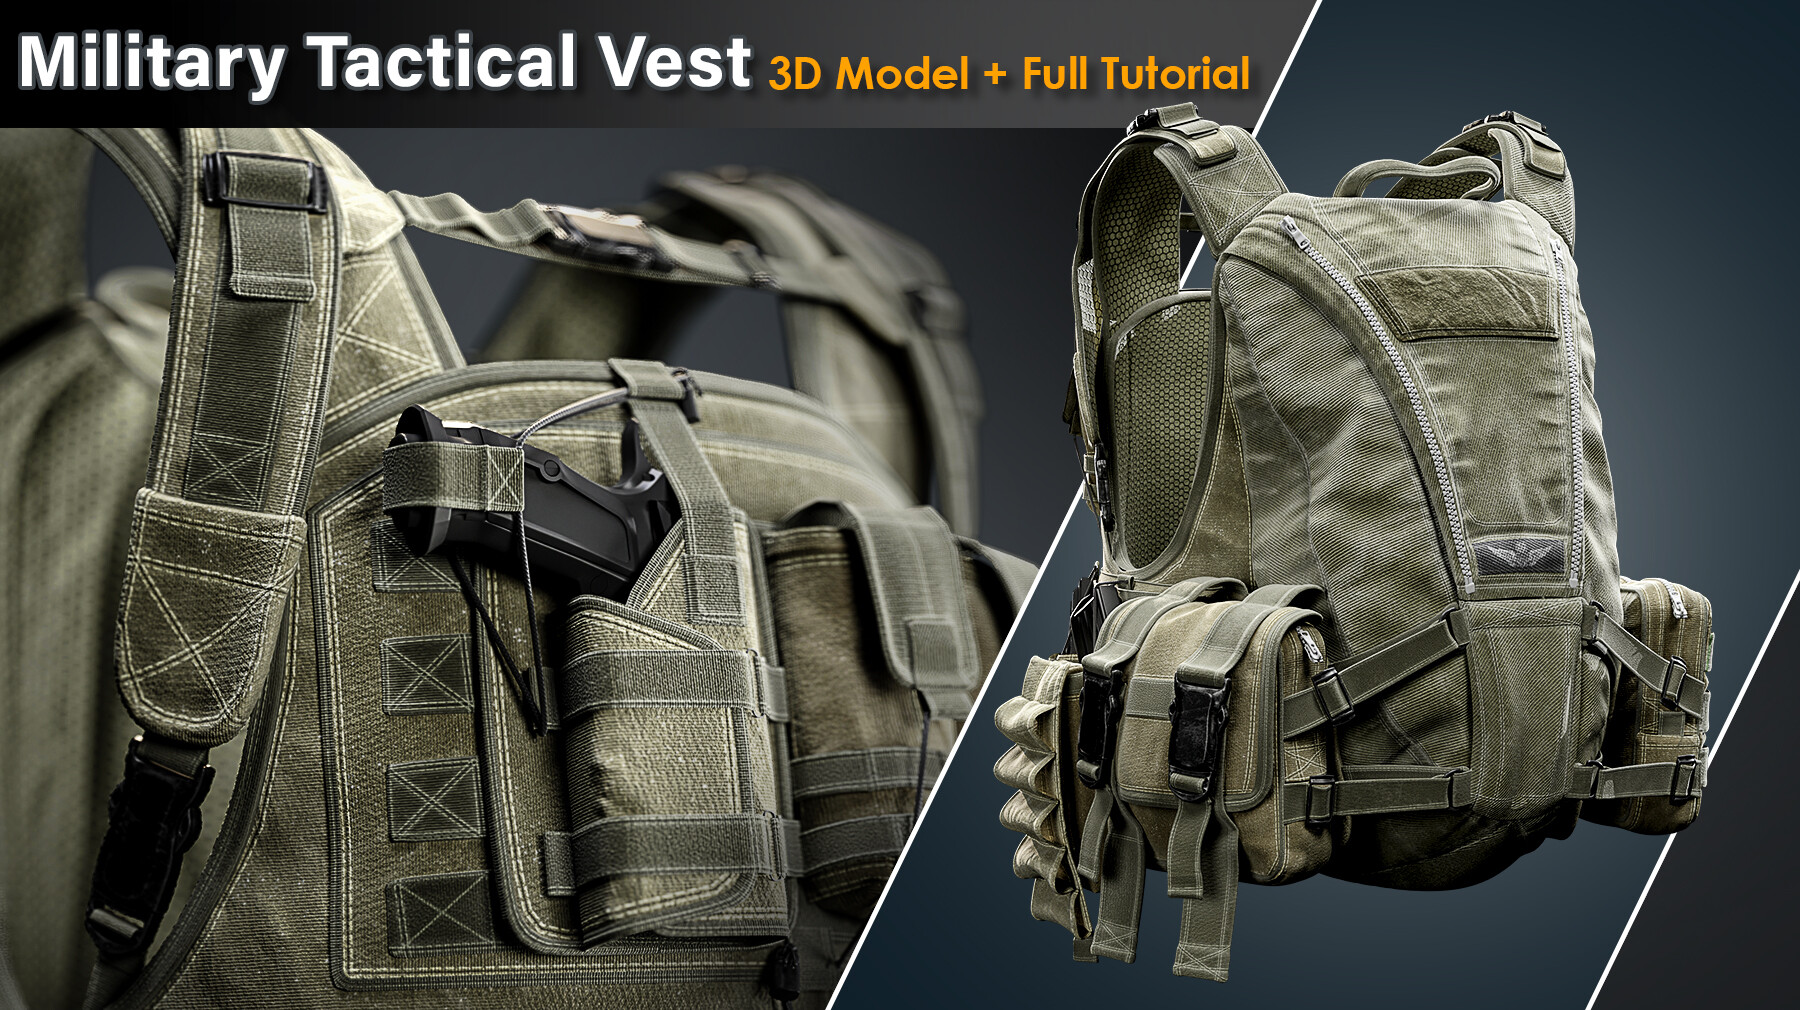 Military Tactical Vest / Full Tutorial + 3D Model